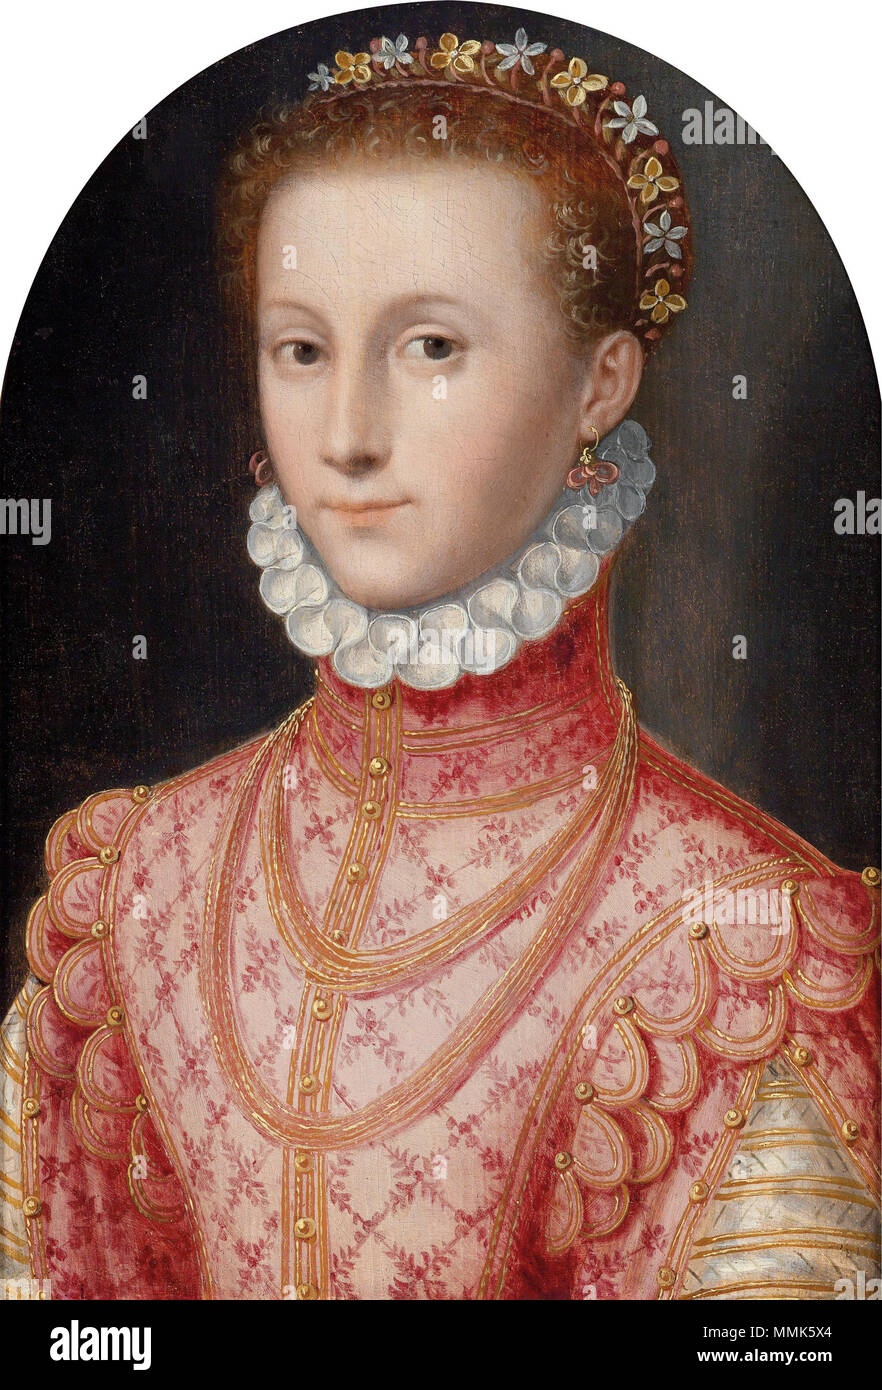 16th century portraiture